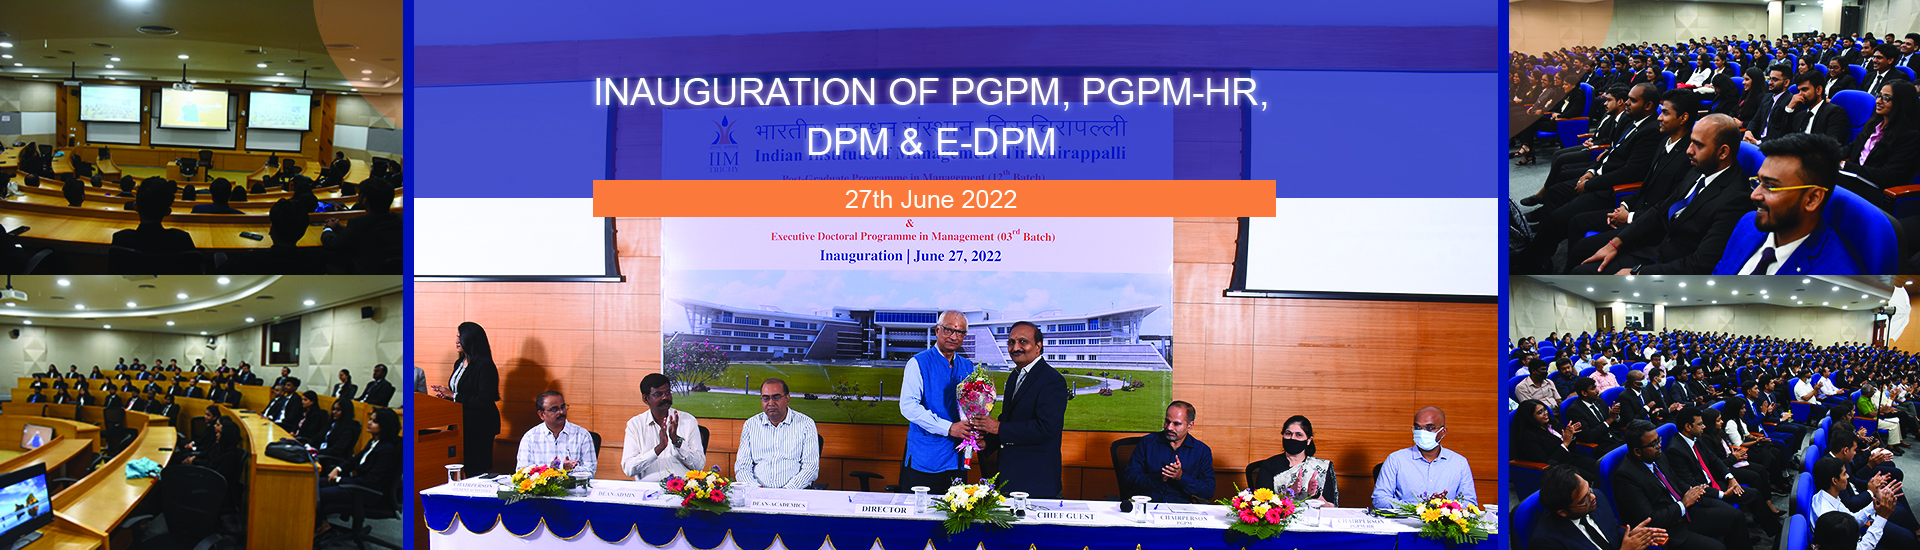 Inauguration of PGPM, PGPM-HR, DPM & E-DPM